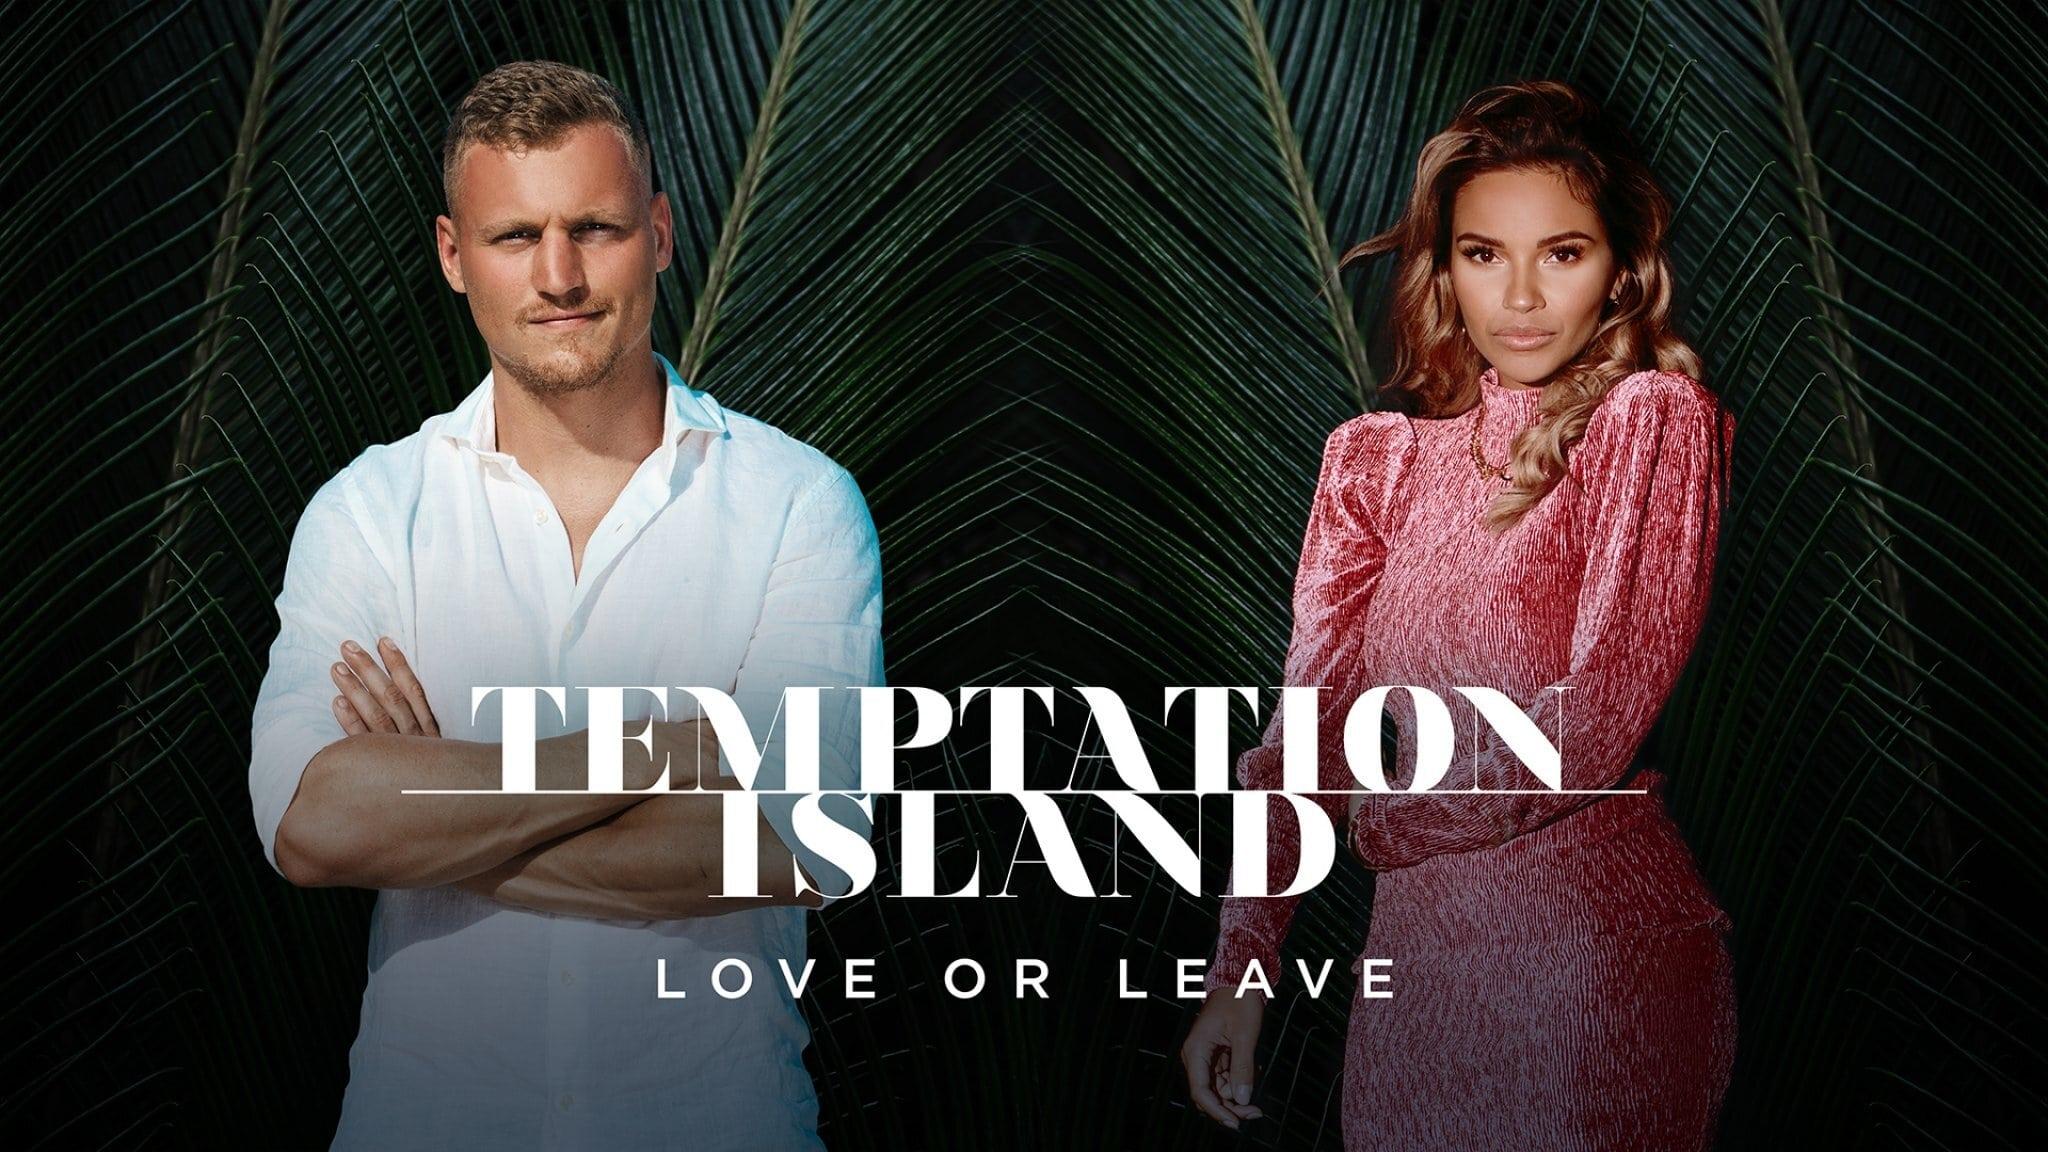 Temptation Island Love or Leave backdrop